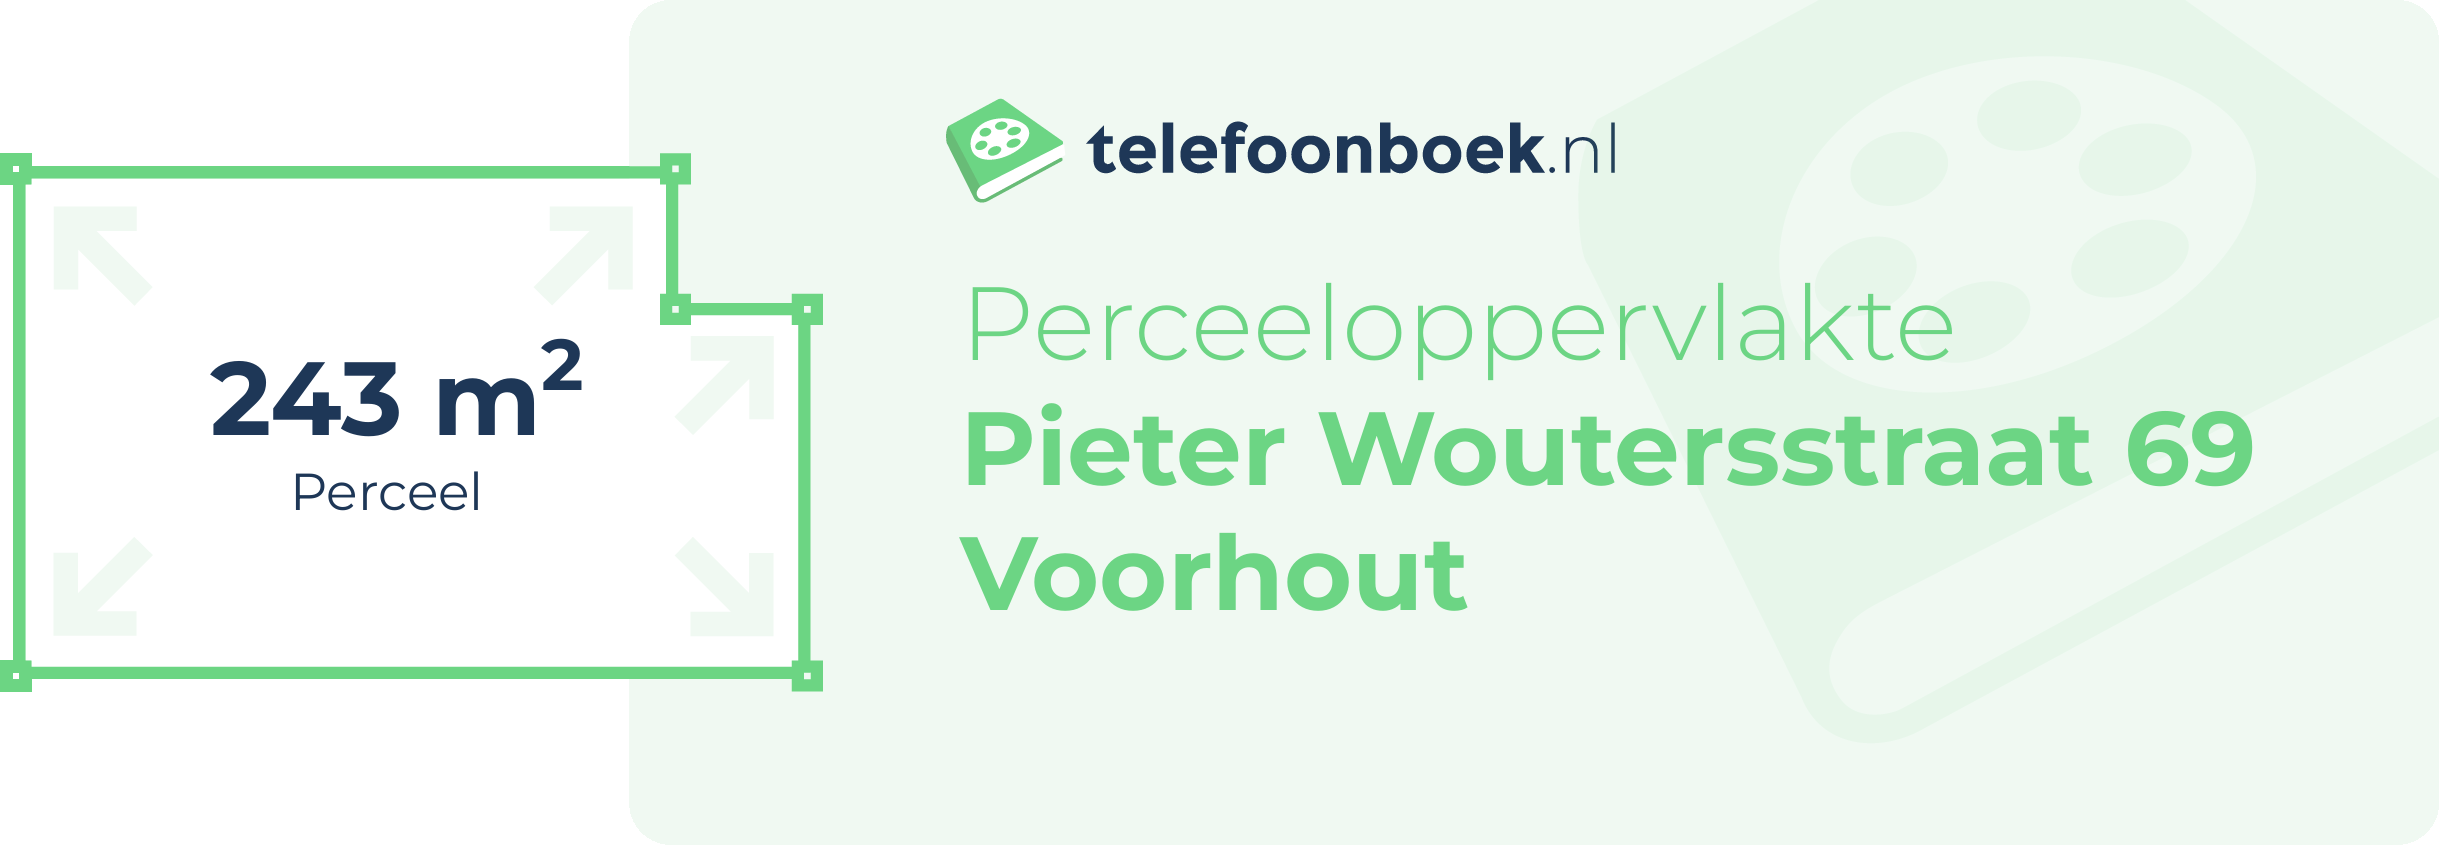 Perceeloppervlakte Pieter Woutersstraat 69 Voorhout